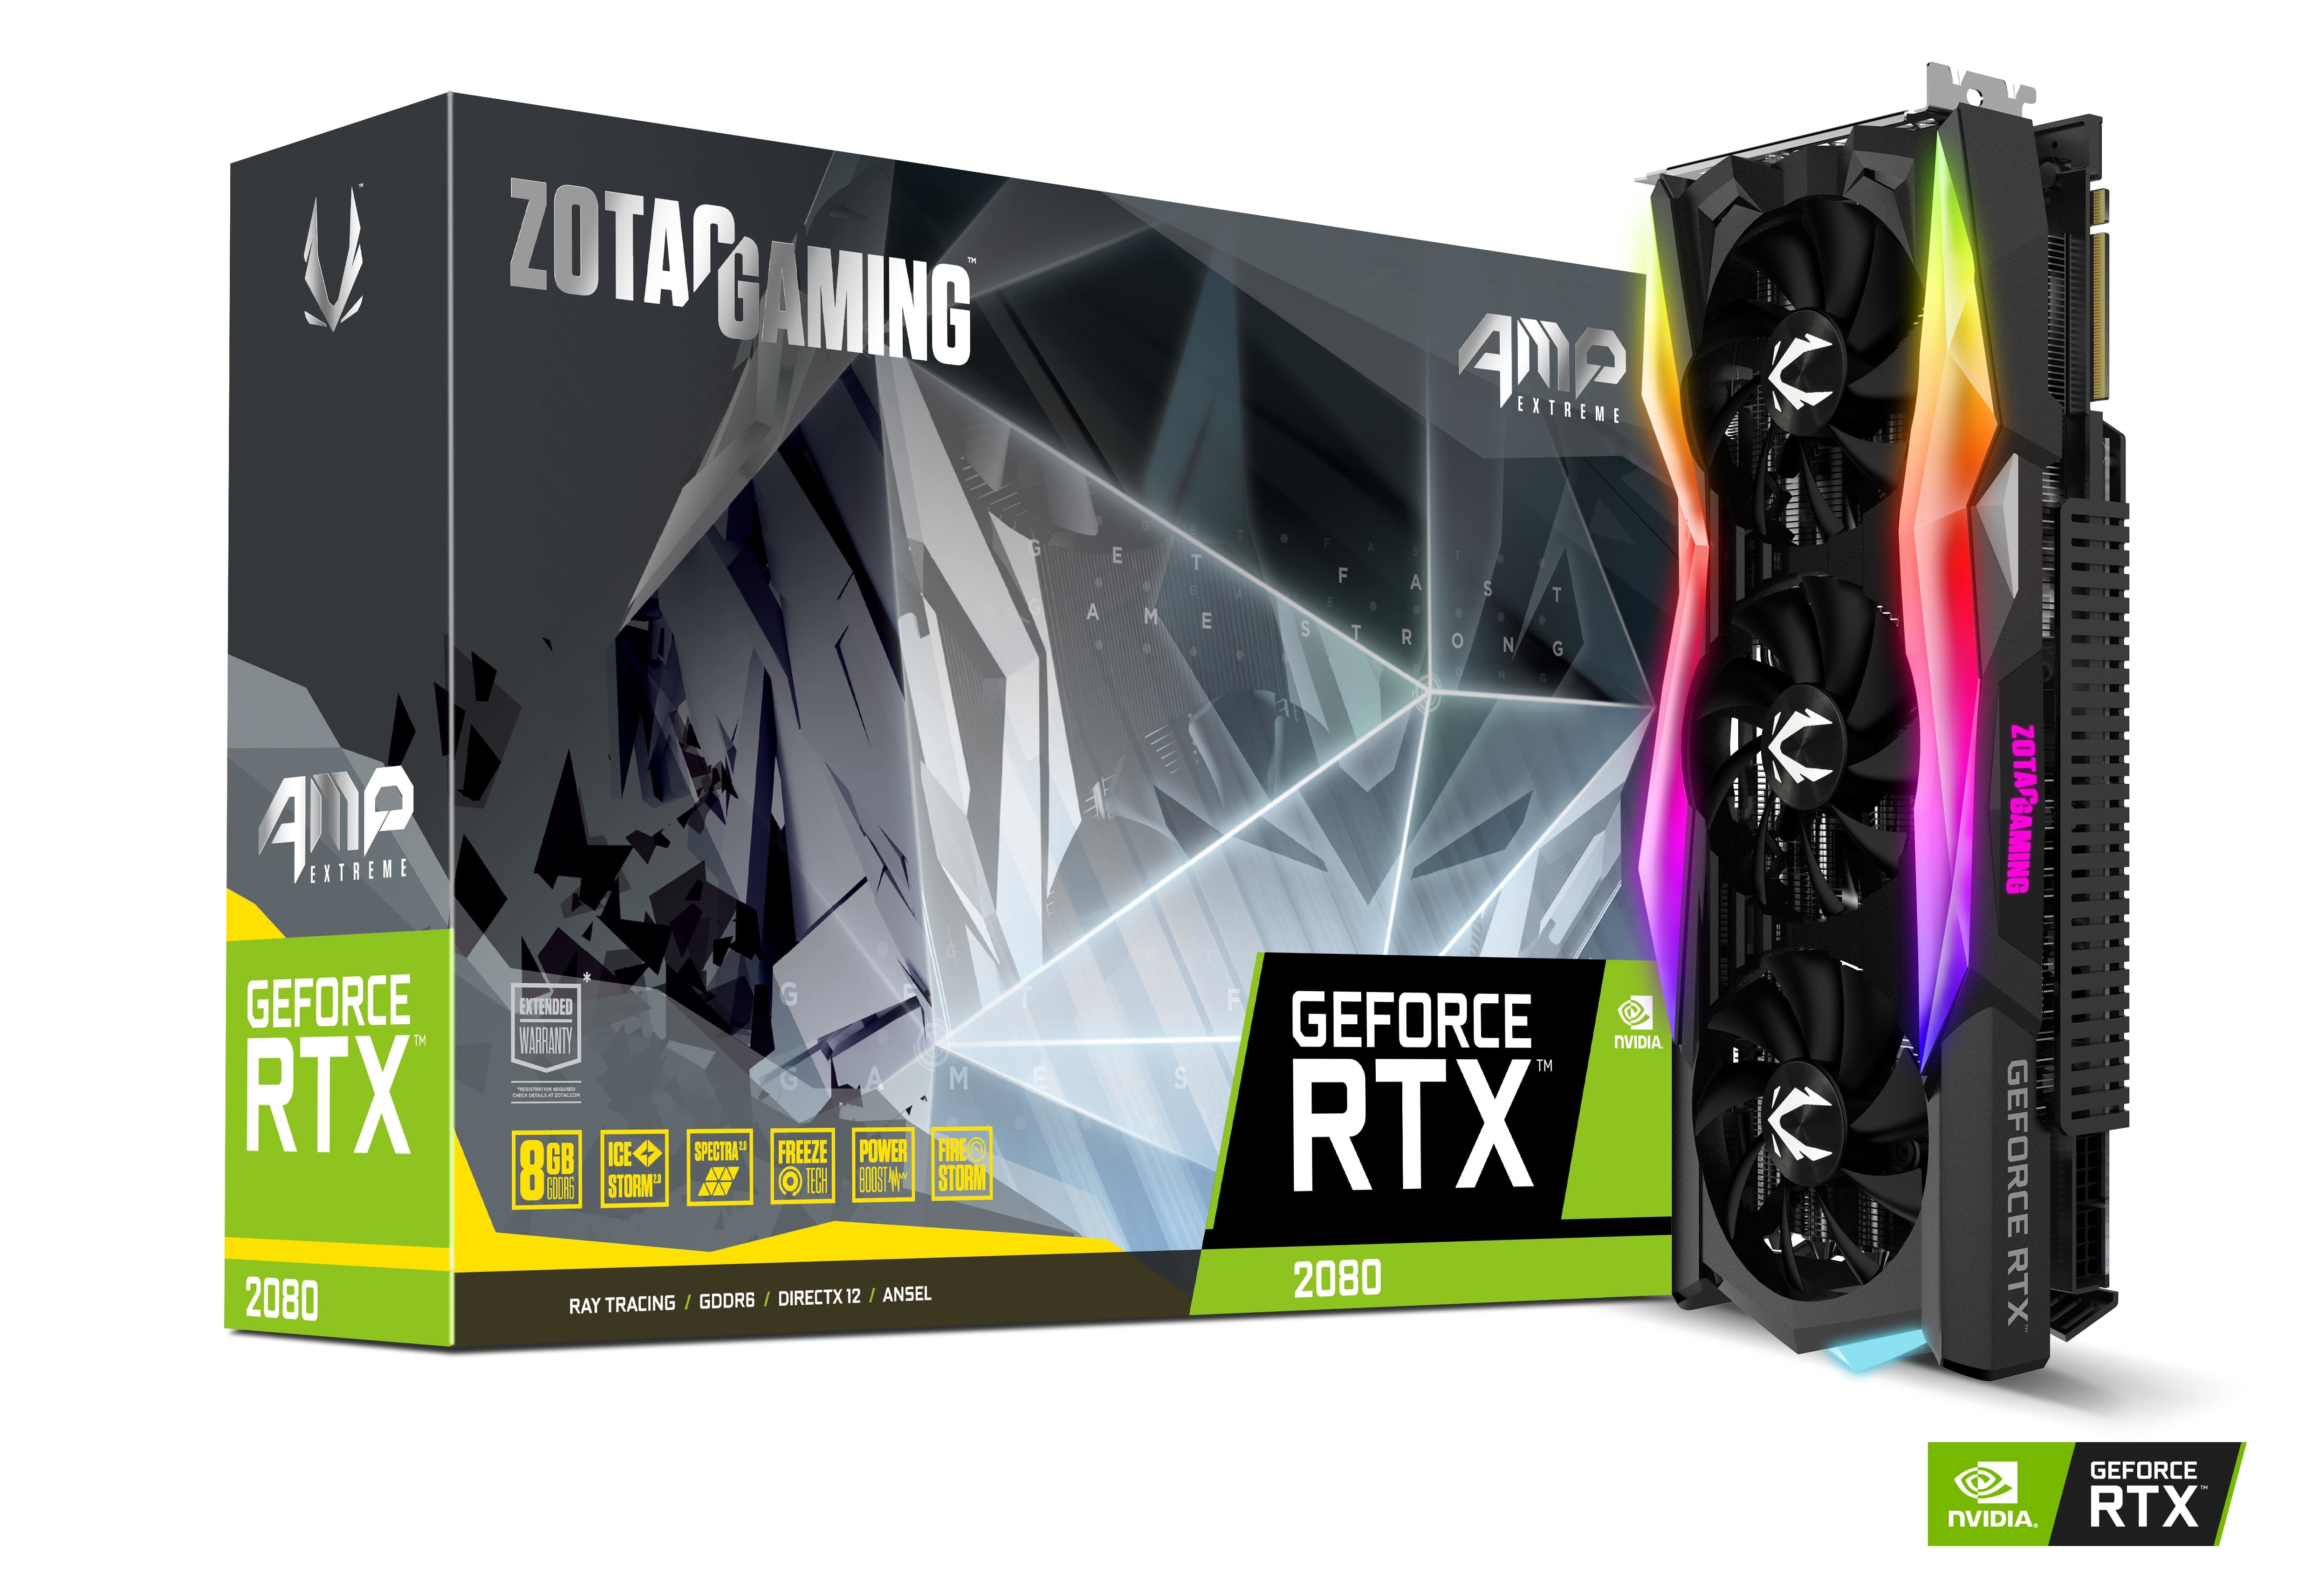 Zotac gaming GeForce RTX 2080 AMP 8GB